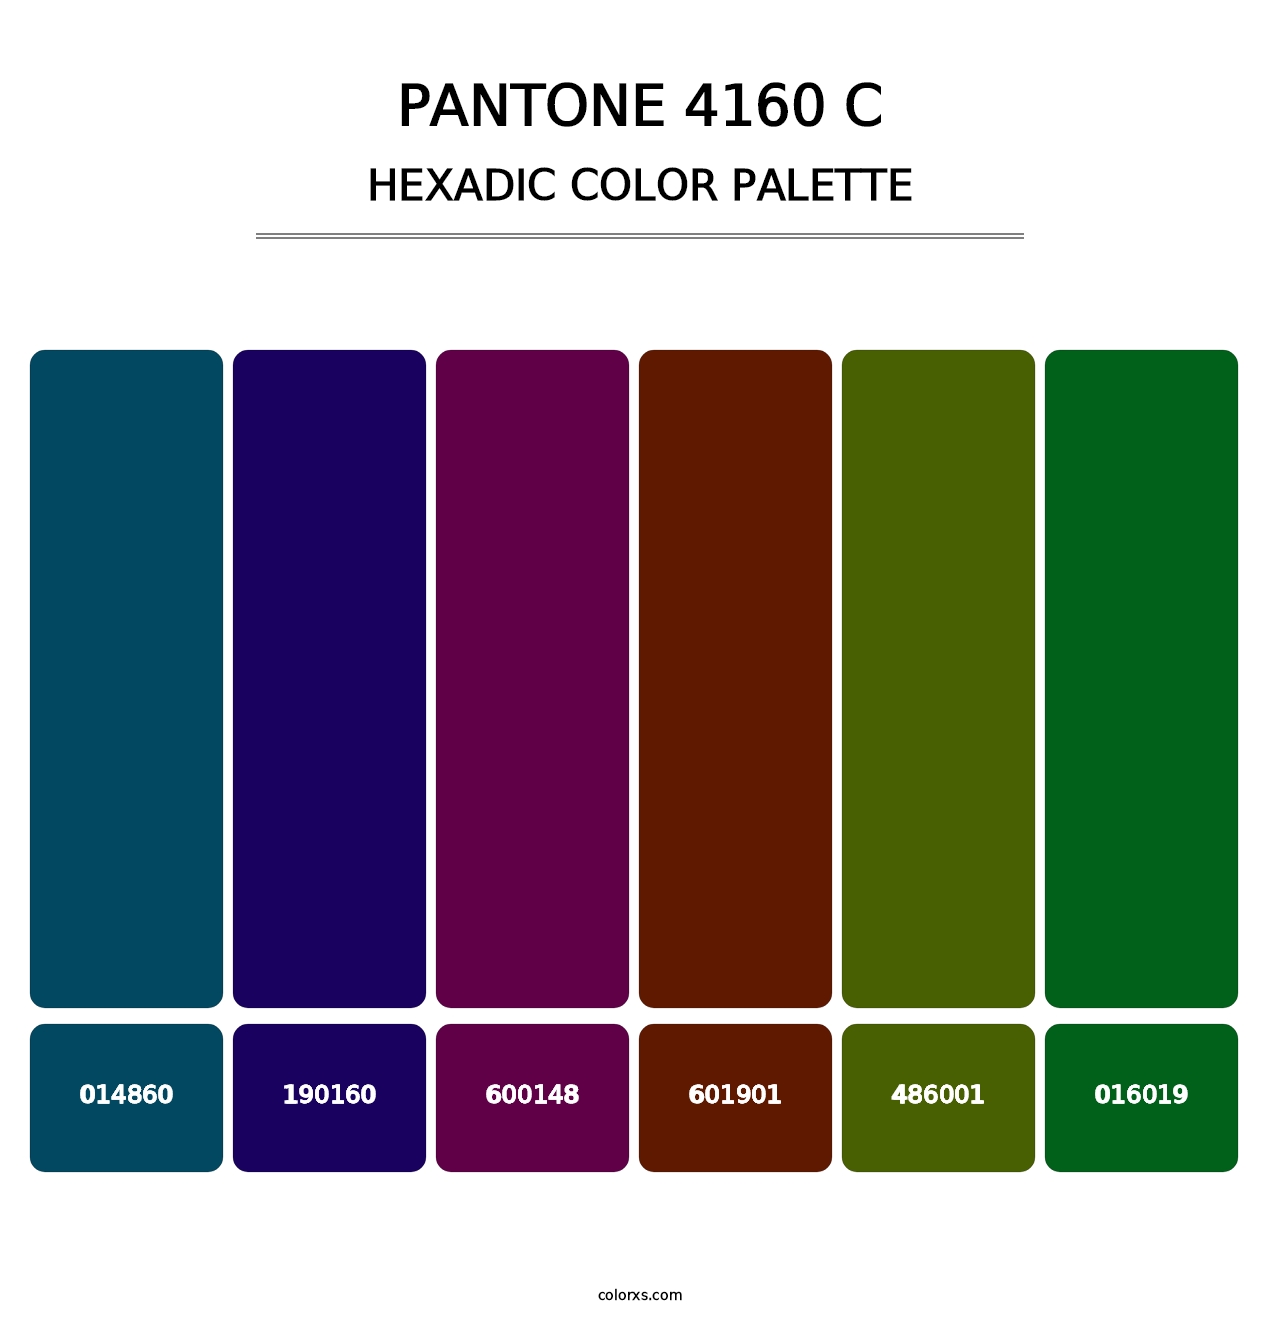 PANTONE 4160 C - Hexadic Color Palette